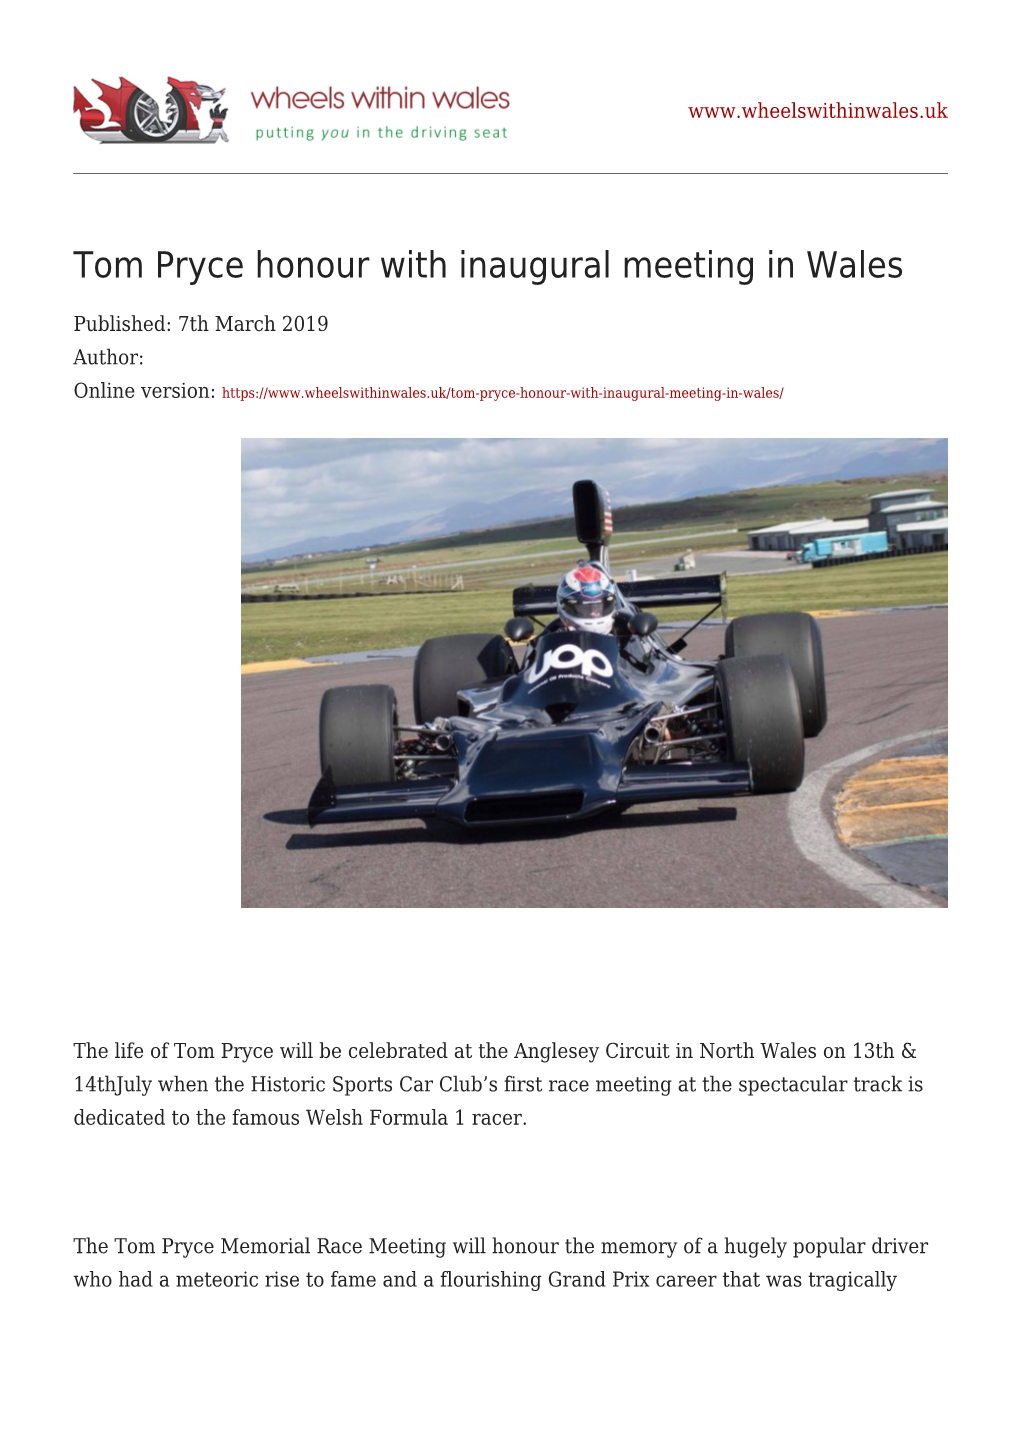 Tom Pryce Honour with Inaugural Meeting in Wales